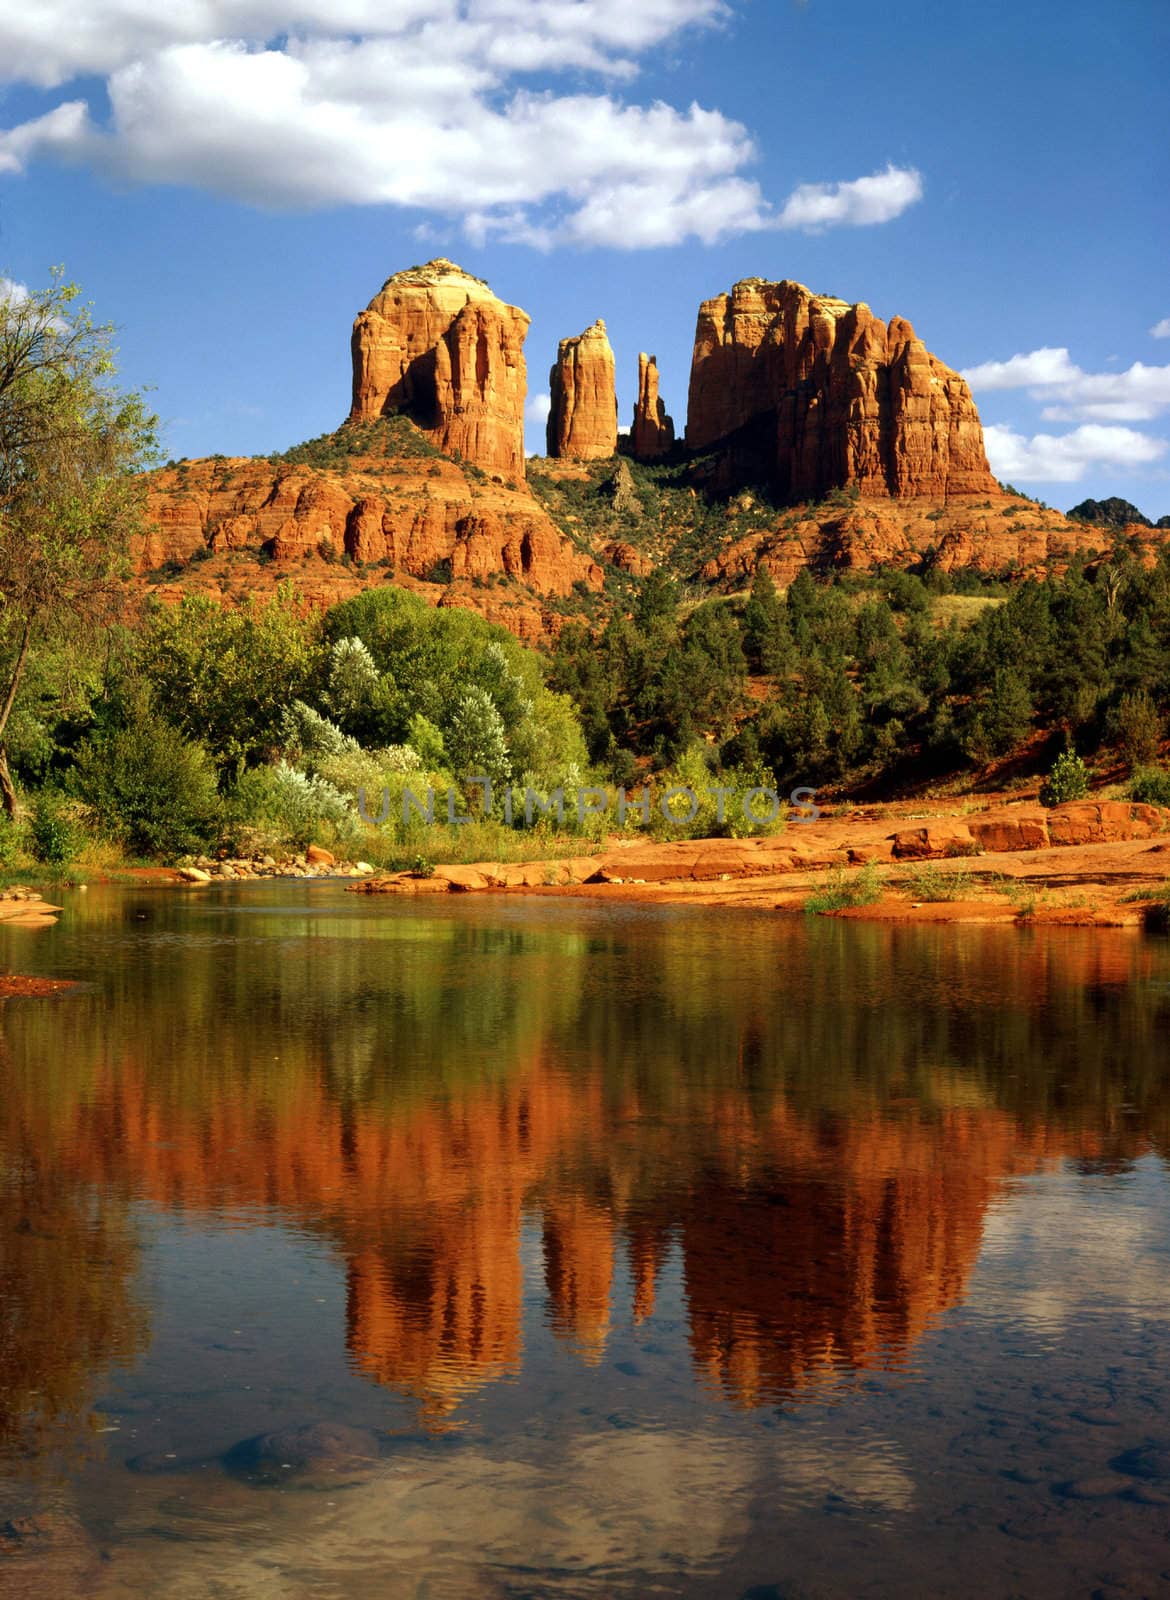 Cathedral Rock, Arizona by jol66